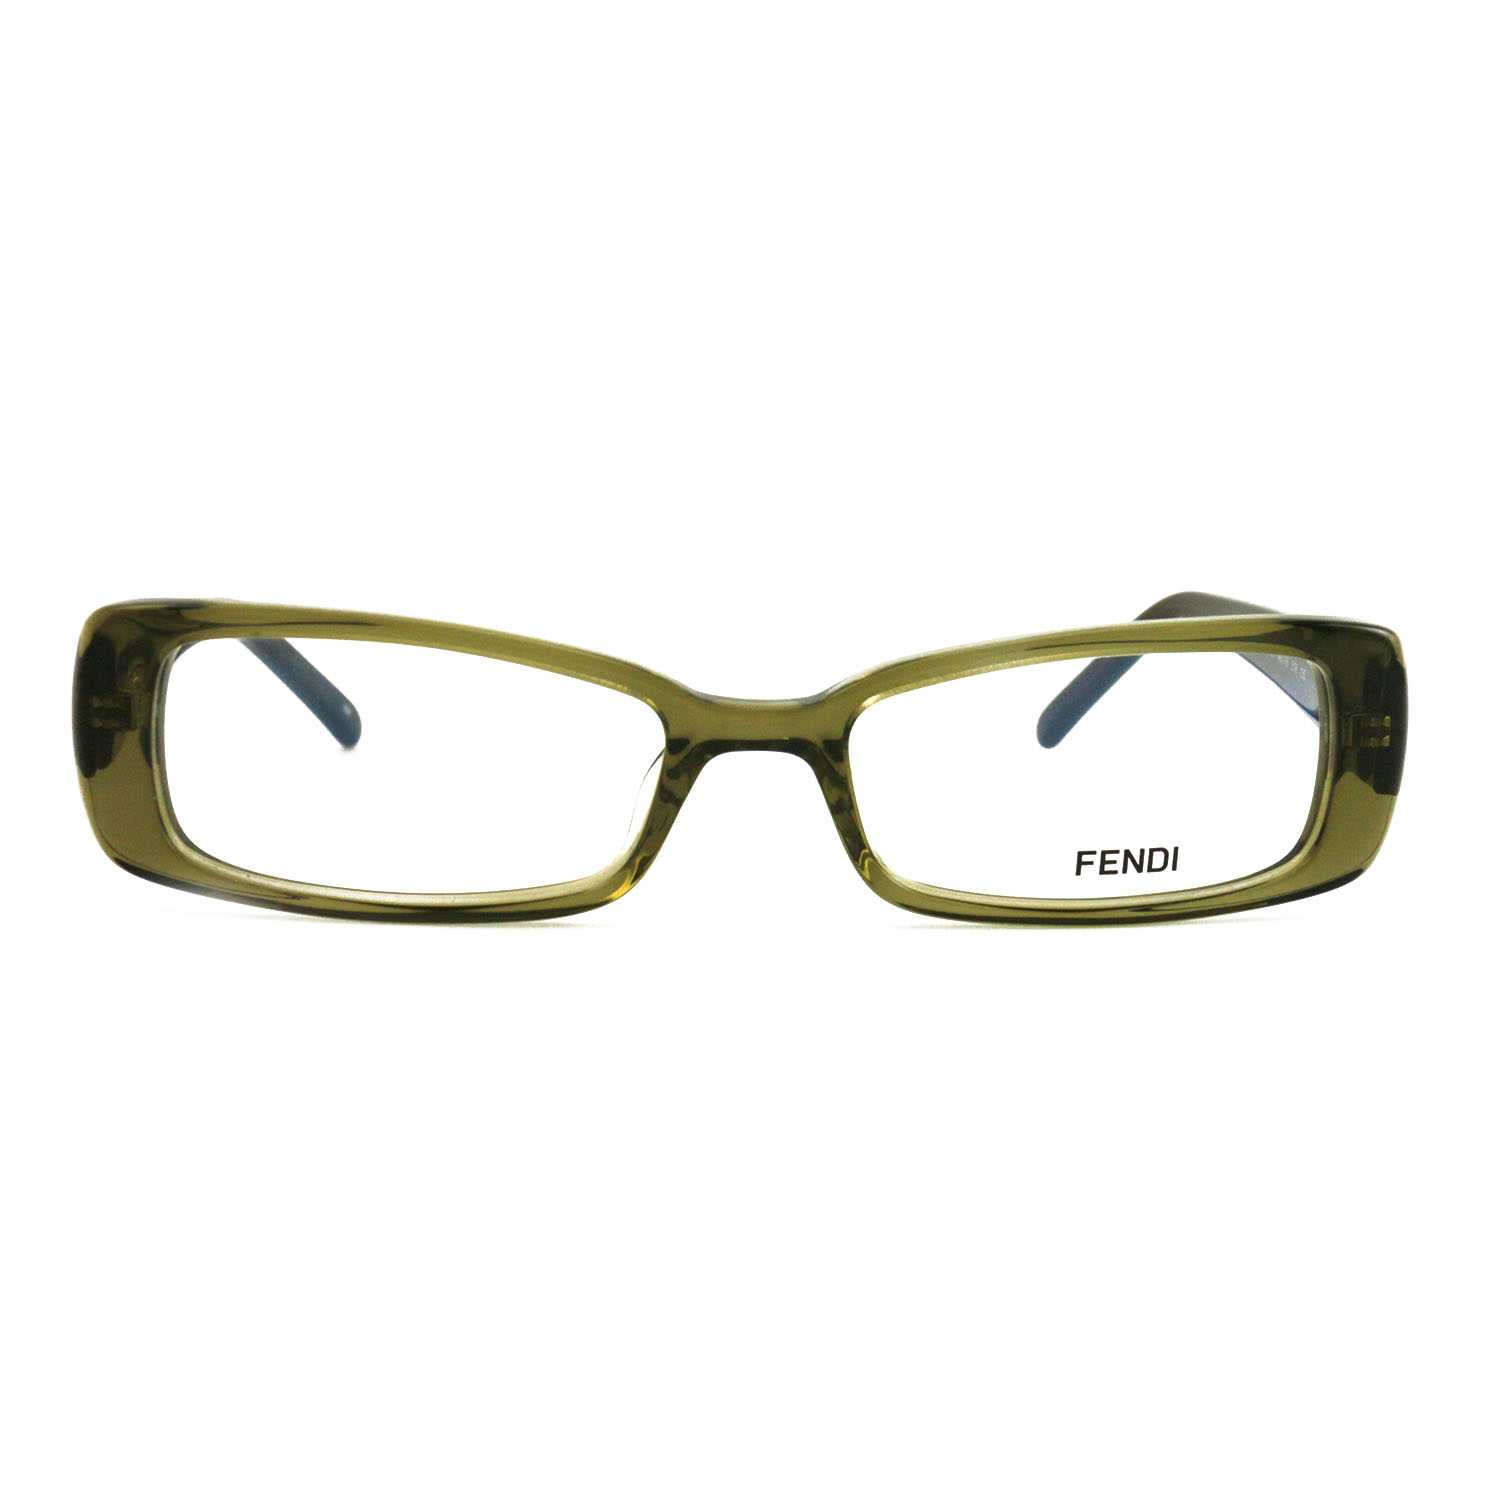 Fendi Womens Eyeglasses Ff906 318 Olive Green 49 16 135 Frames